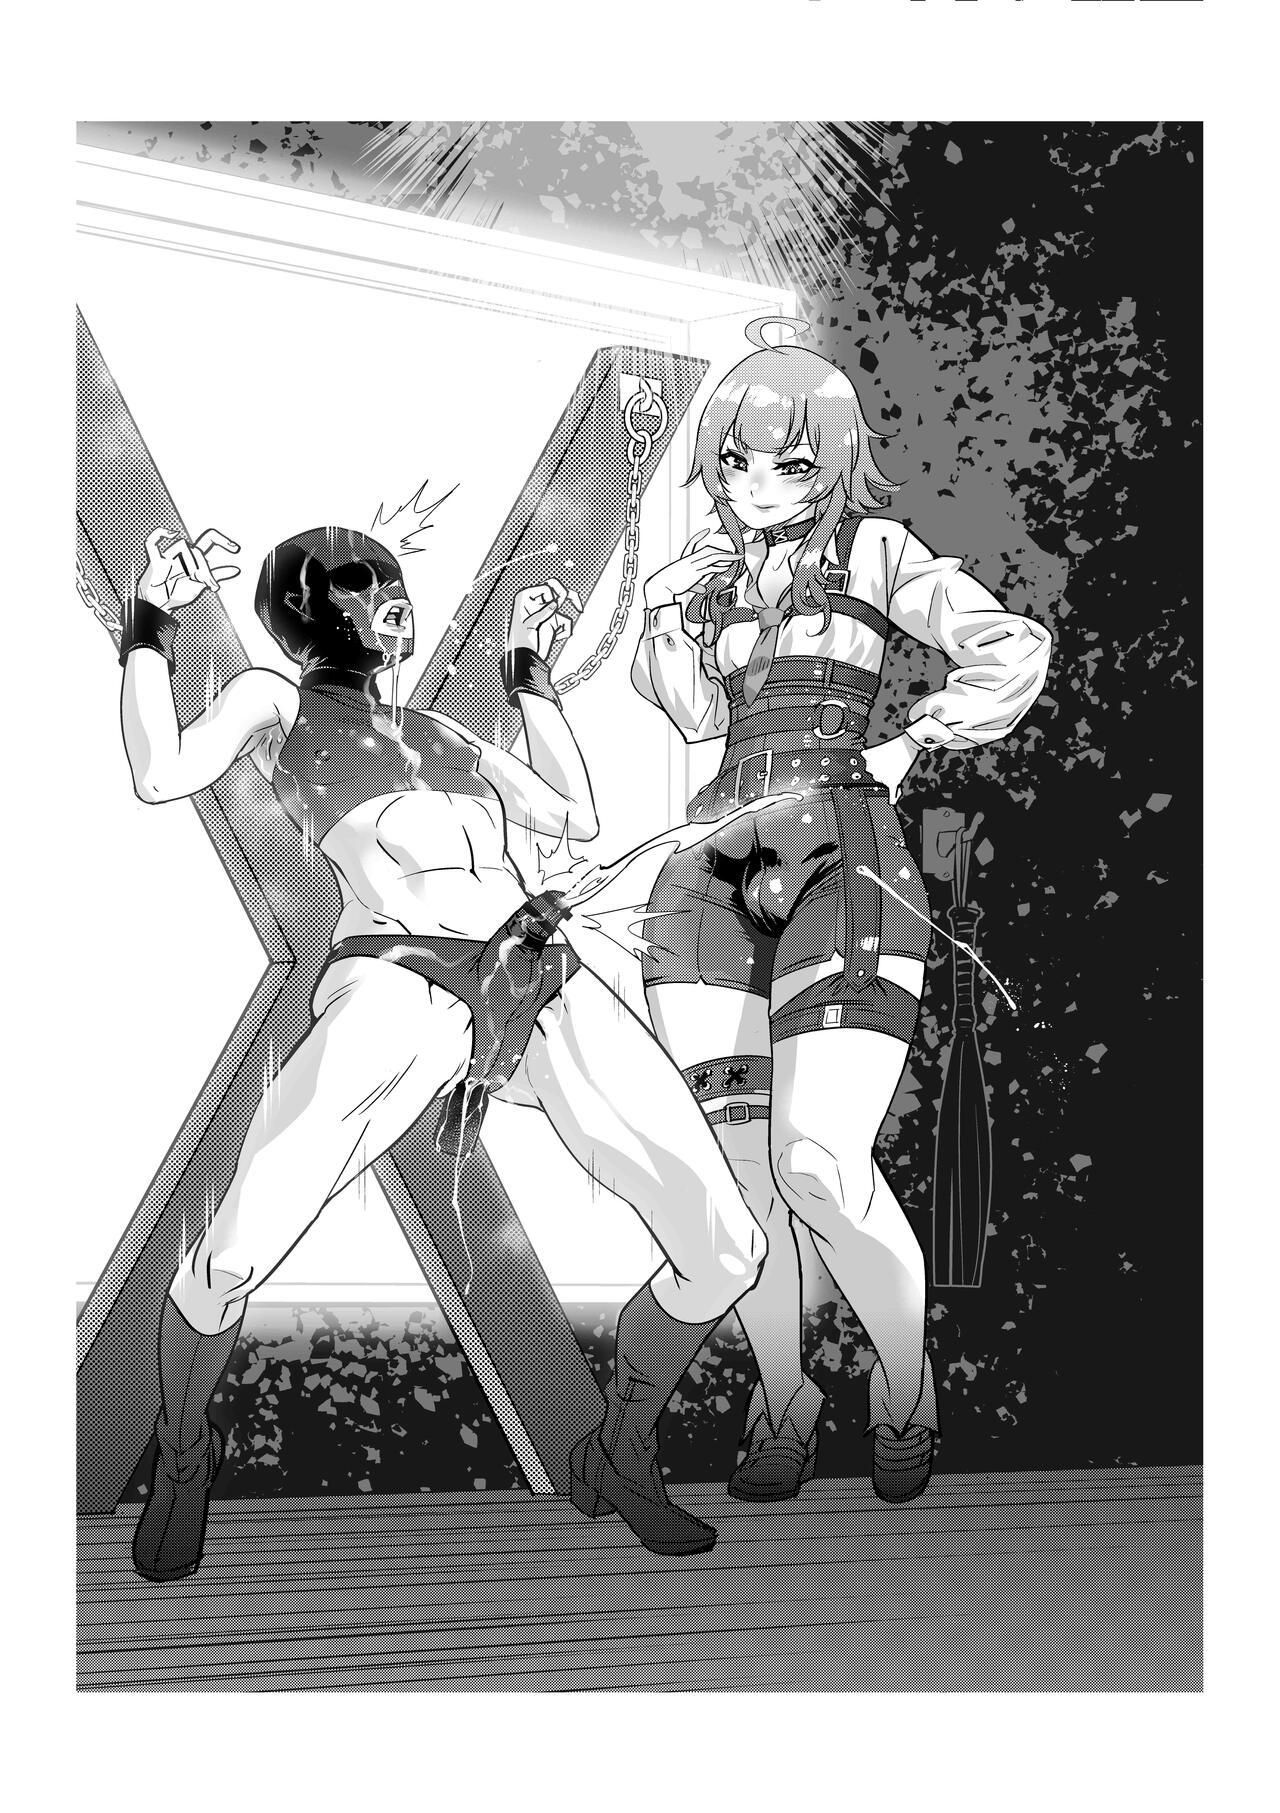 Fast Erotic Manga Vol.2 29